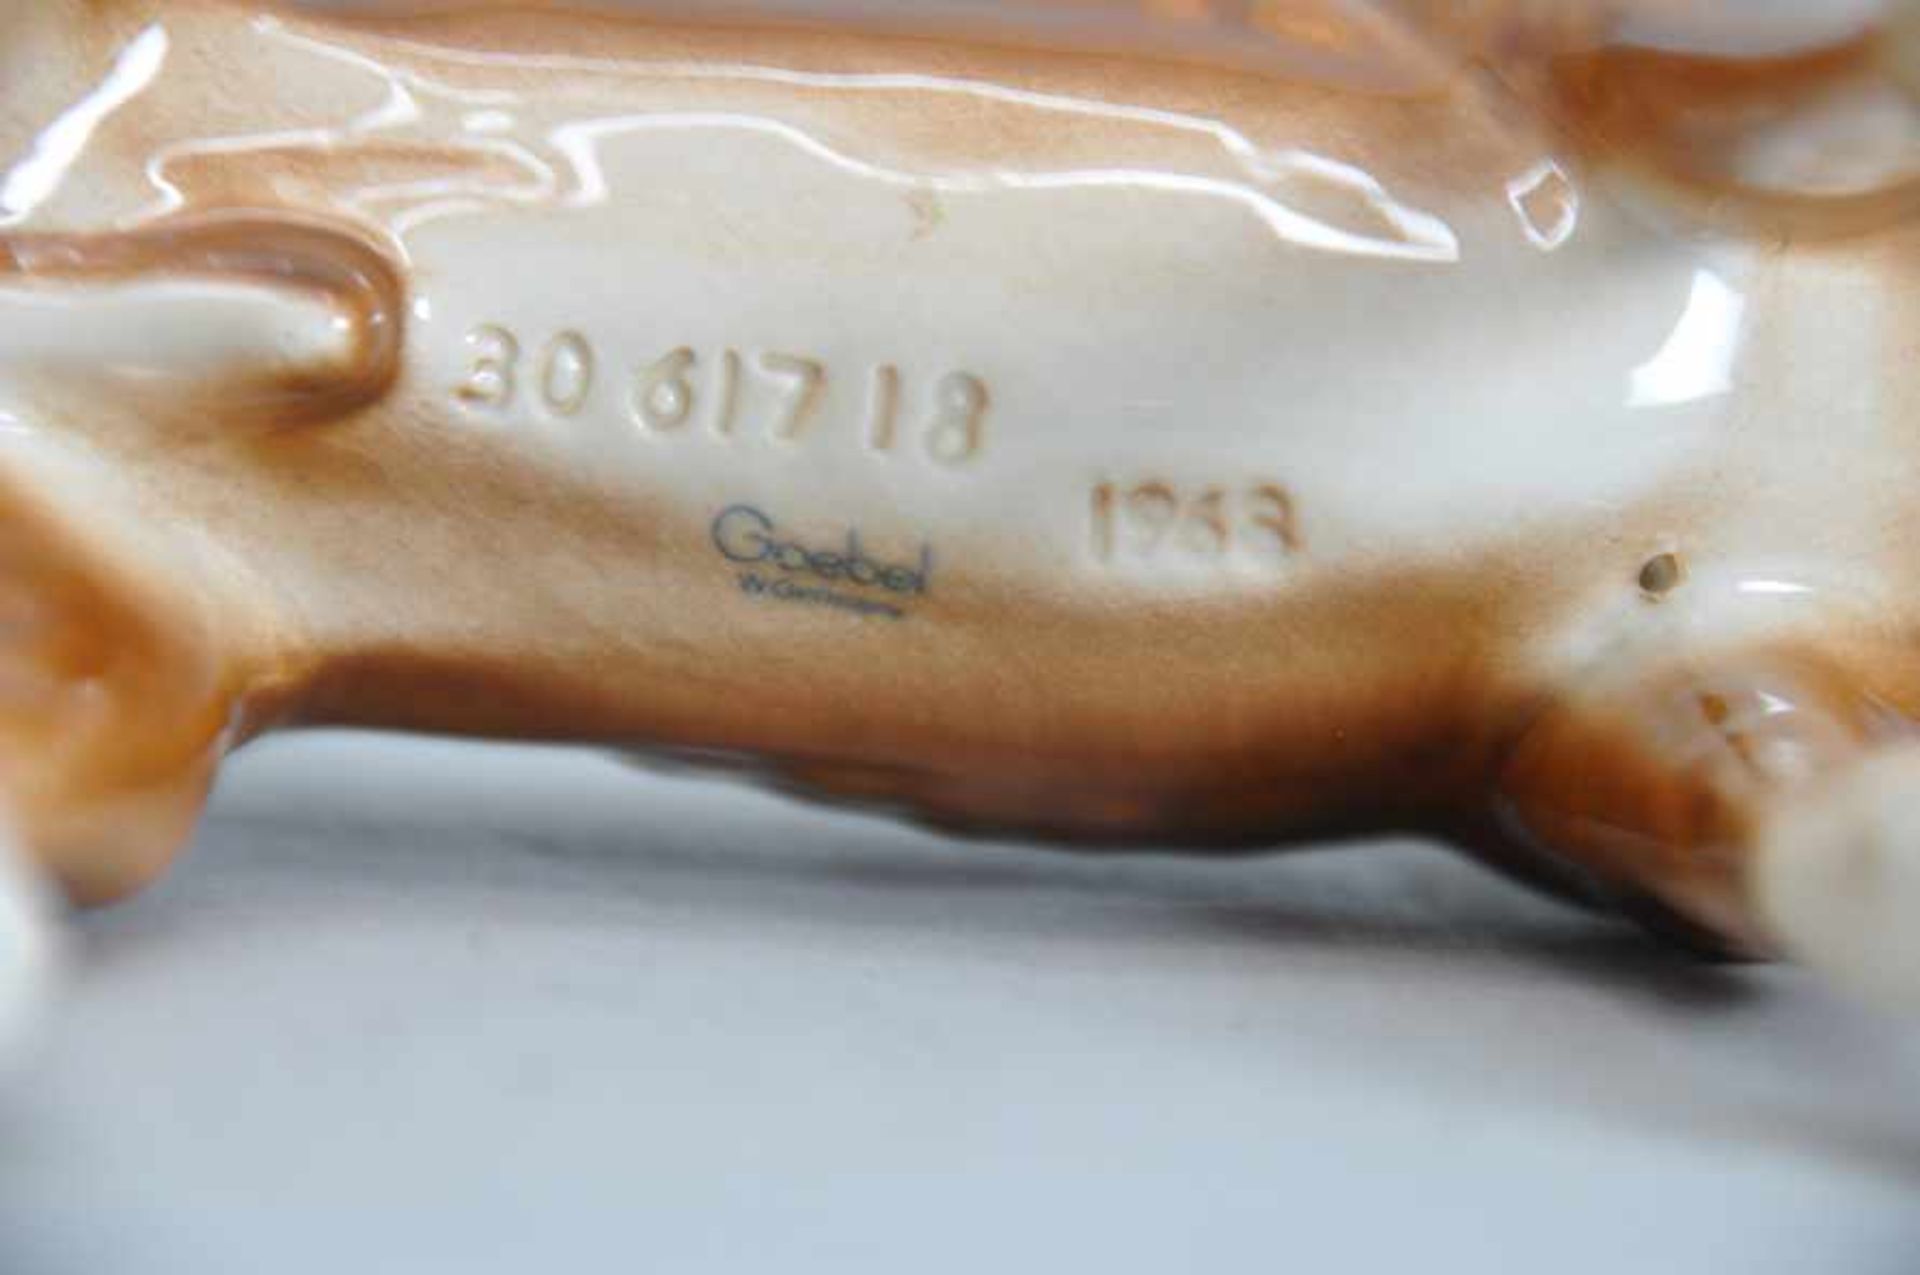 Boxer, Porzellanfigur, polychrom bemalt. Goebel, Modellnummer 3061718, Jahr 1968. Maße ca. 21 x 19 x - Bild 4 aus 7